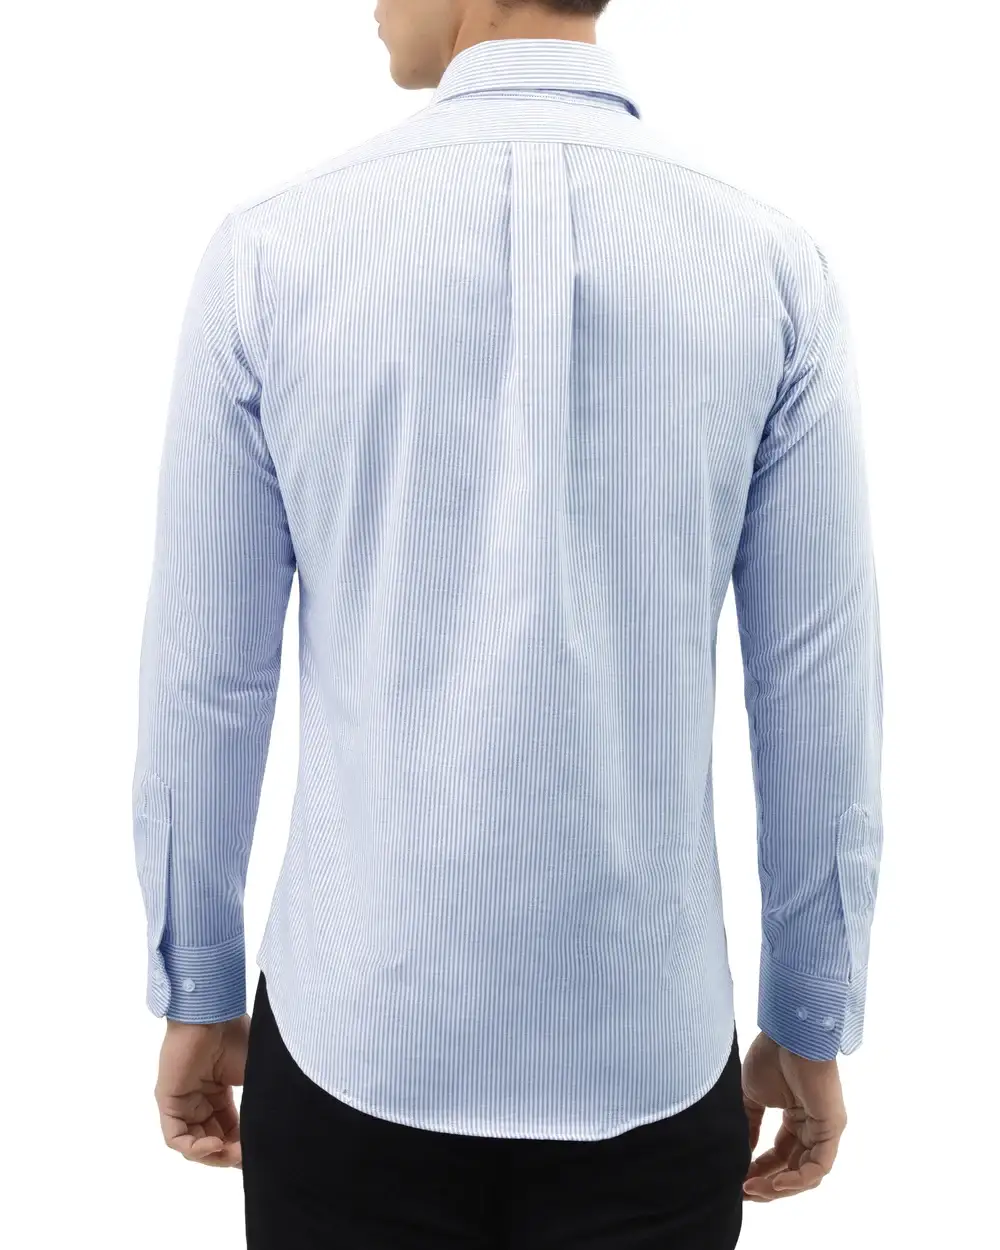 Camisa oxford rayada manga larga slim fit azul